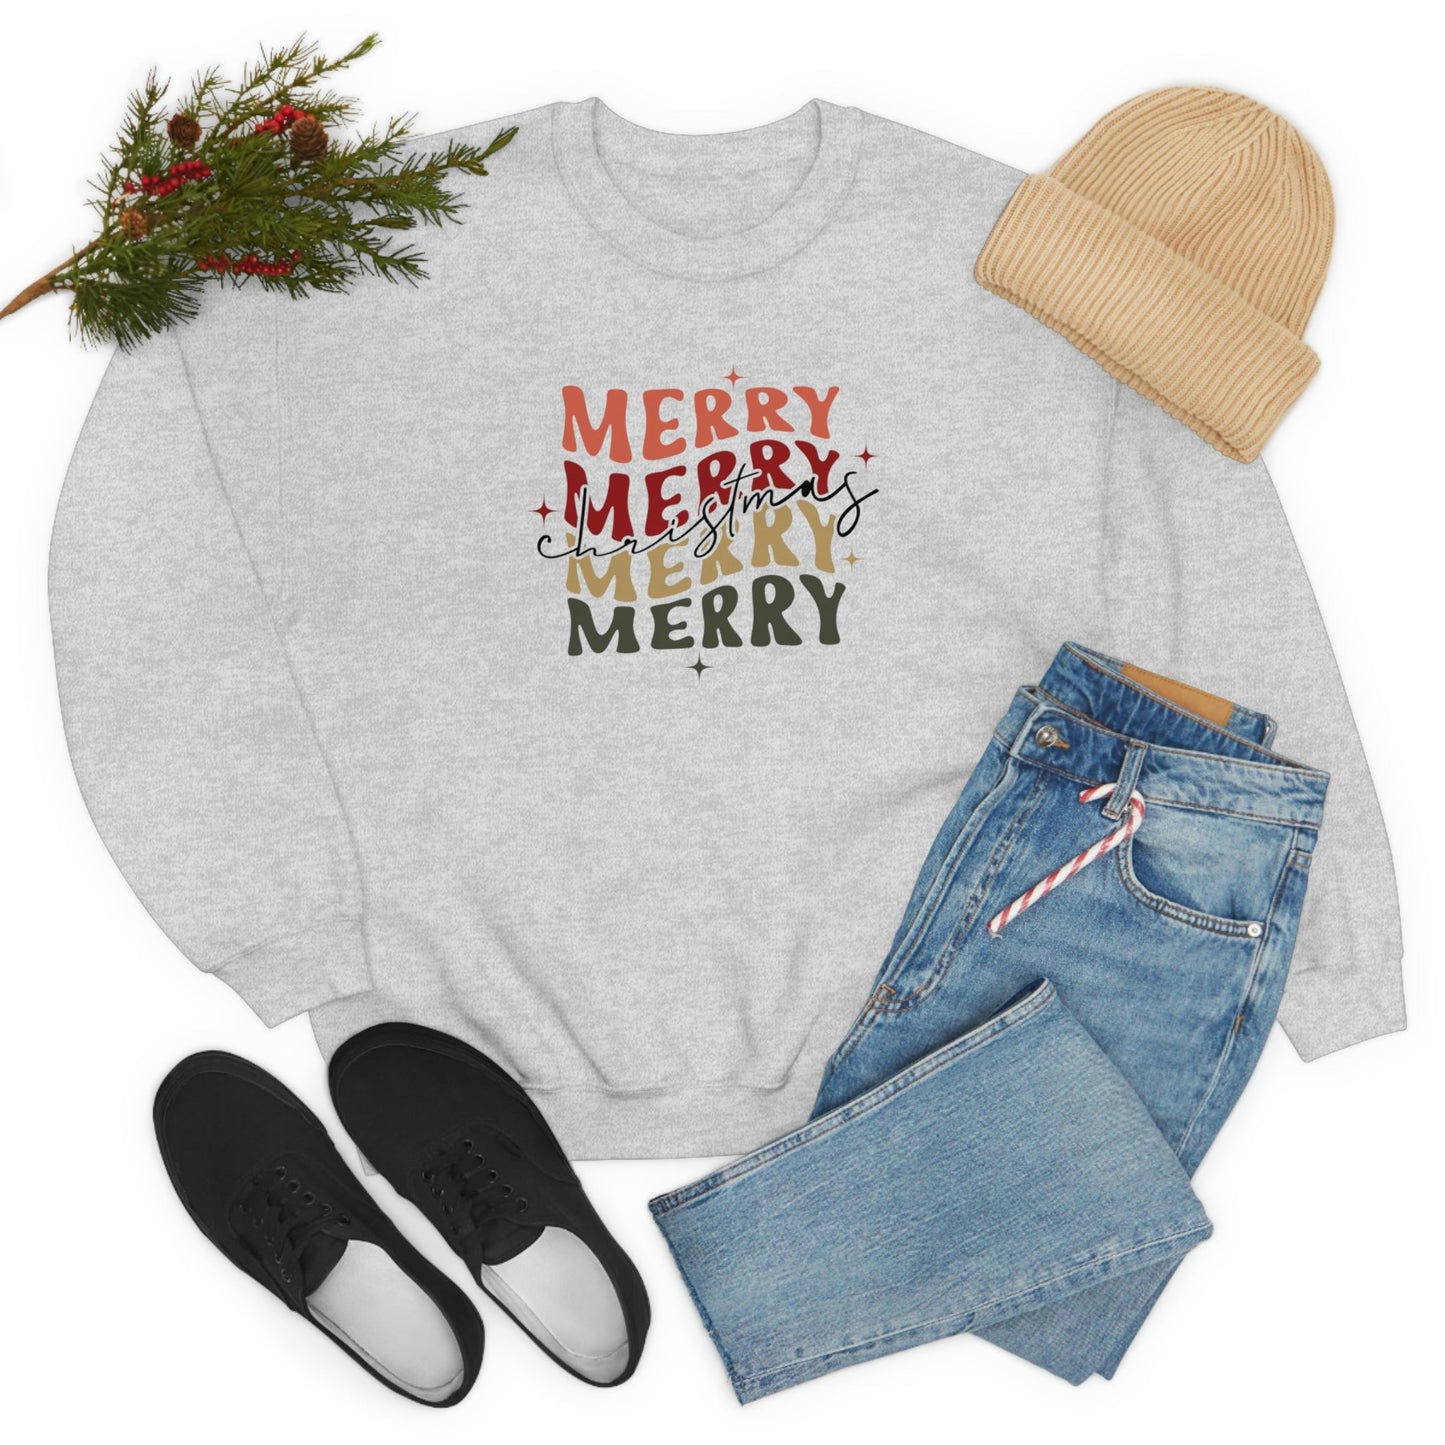 Merry Christmas Retro Crewneck Sweatshirt - numonet